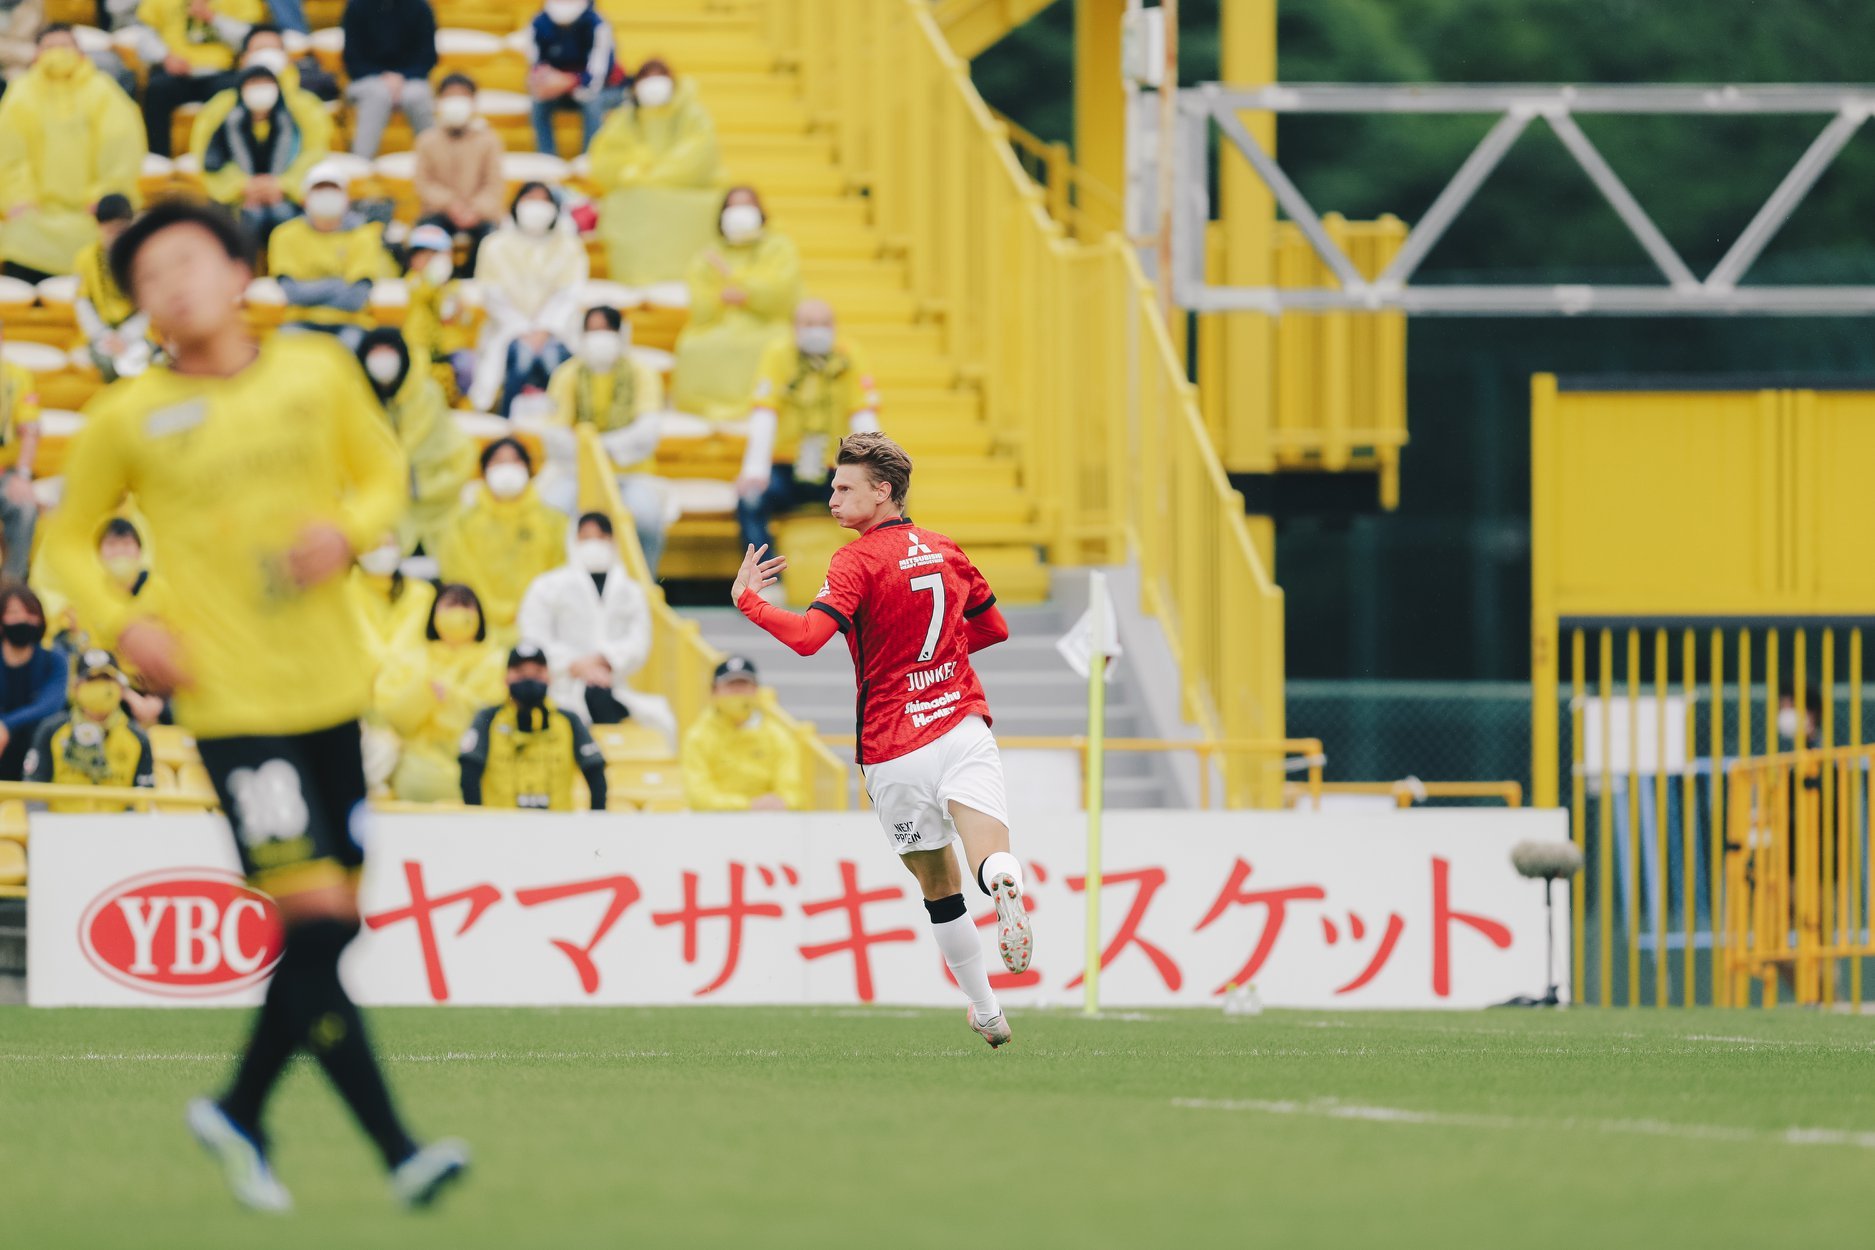 Preview J.League Cup Matchday 6: Penentuan Tiket Playoff Babak Gugur